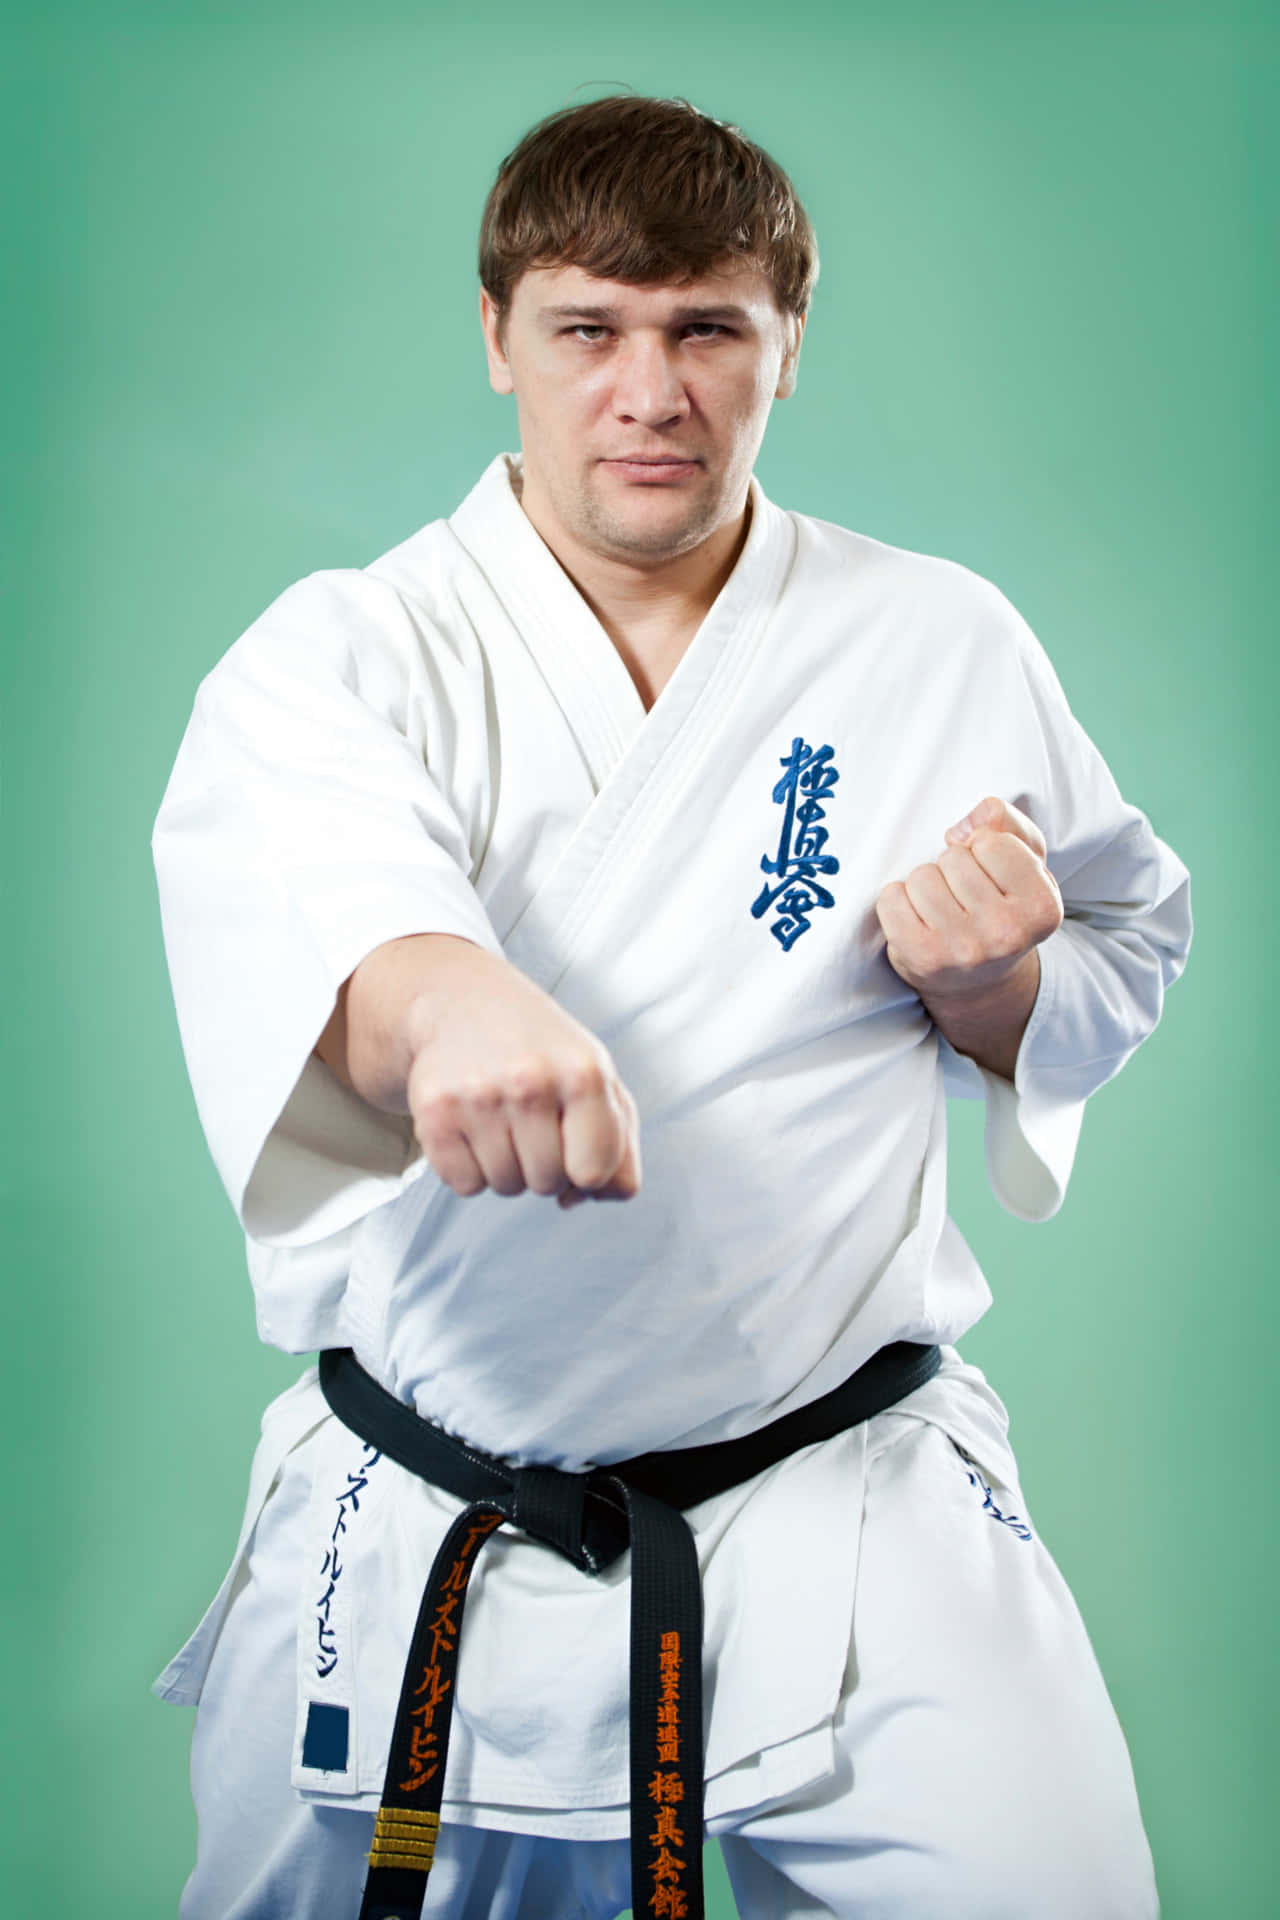 A Taekwondo fighter wearing traditional uniform. Wallpaper